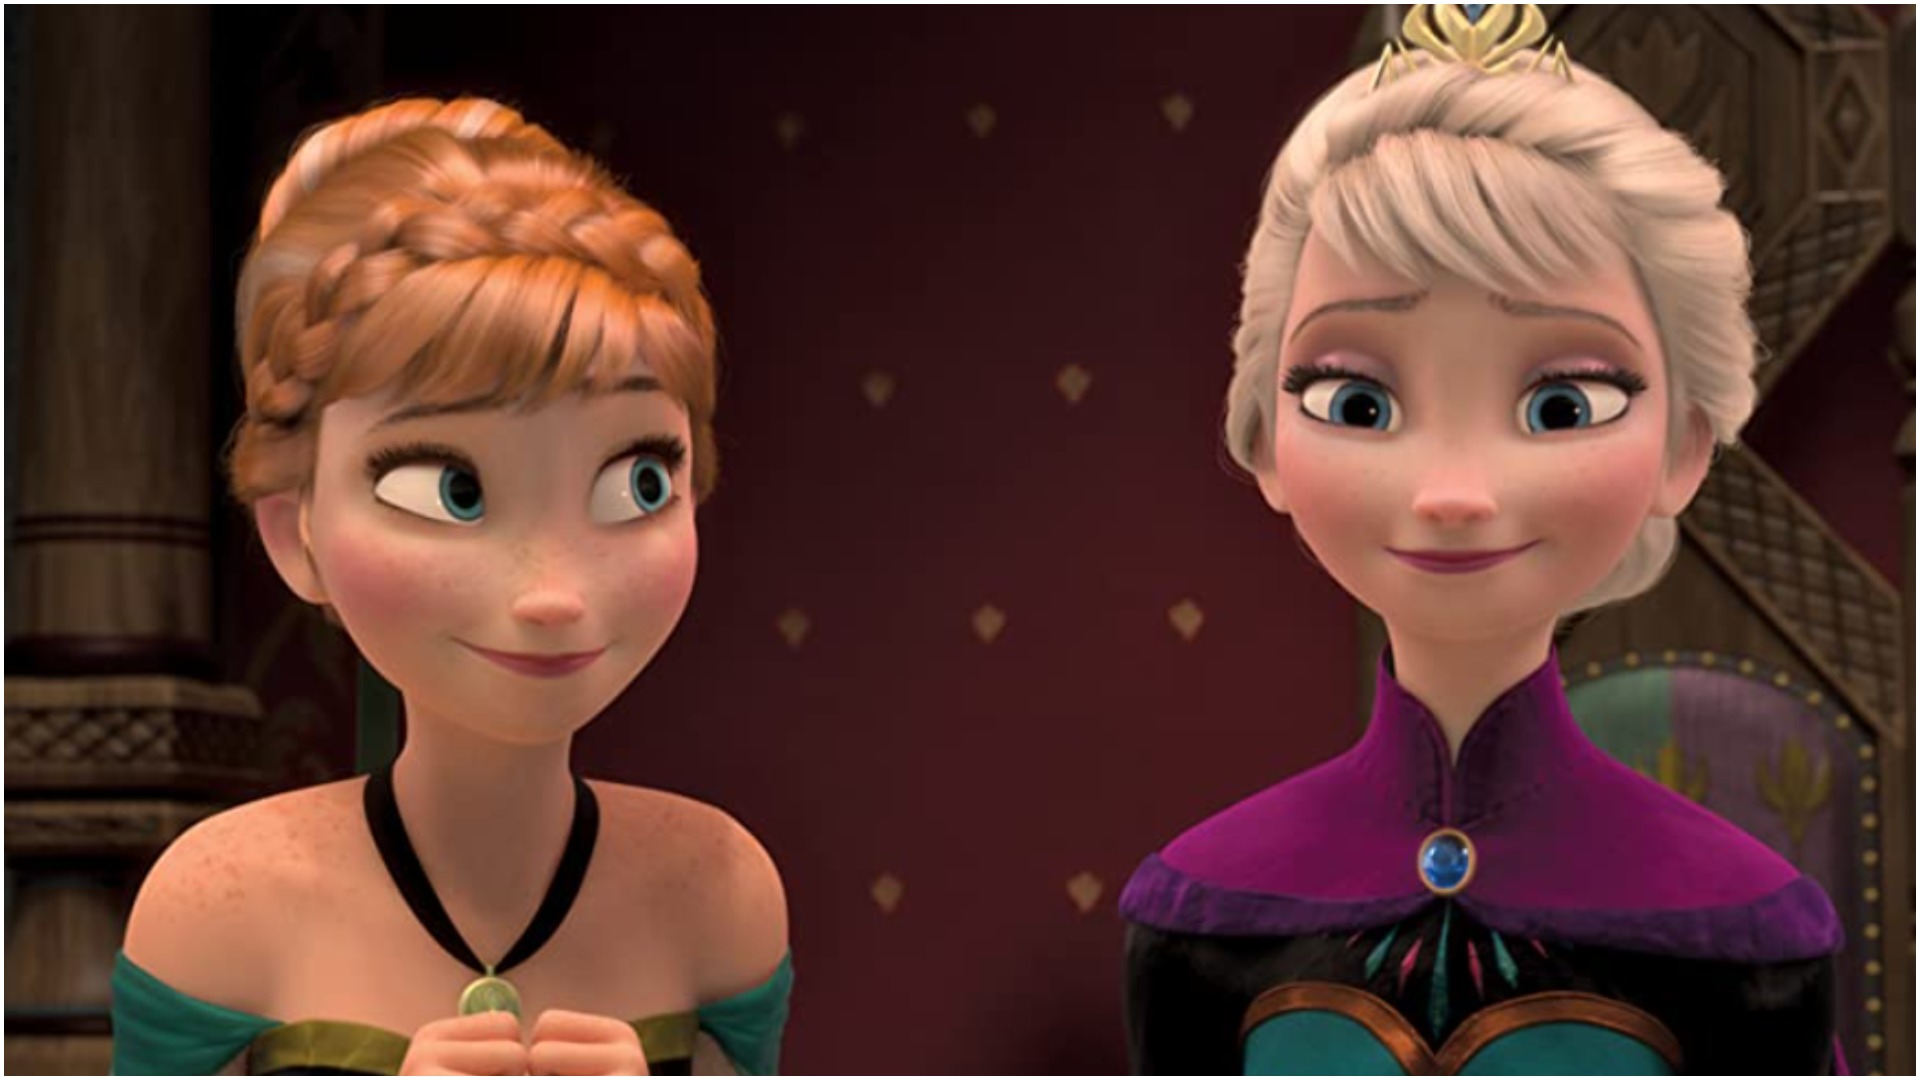 Disney Princesses explained: why aren't Frozen's Elsa Anna princesses? GamesRadar+